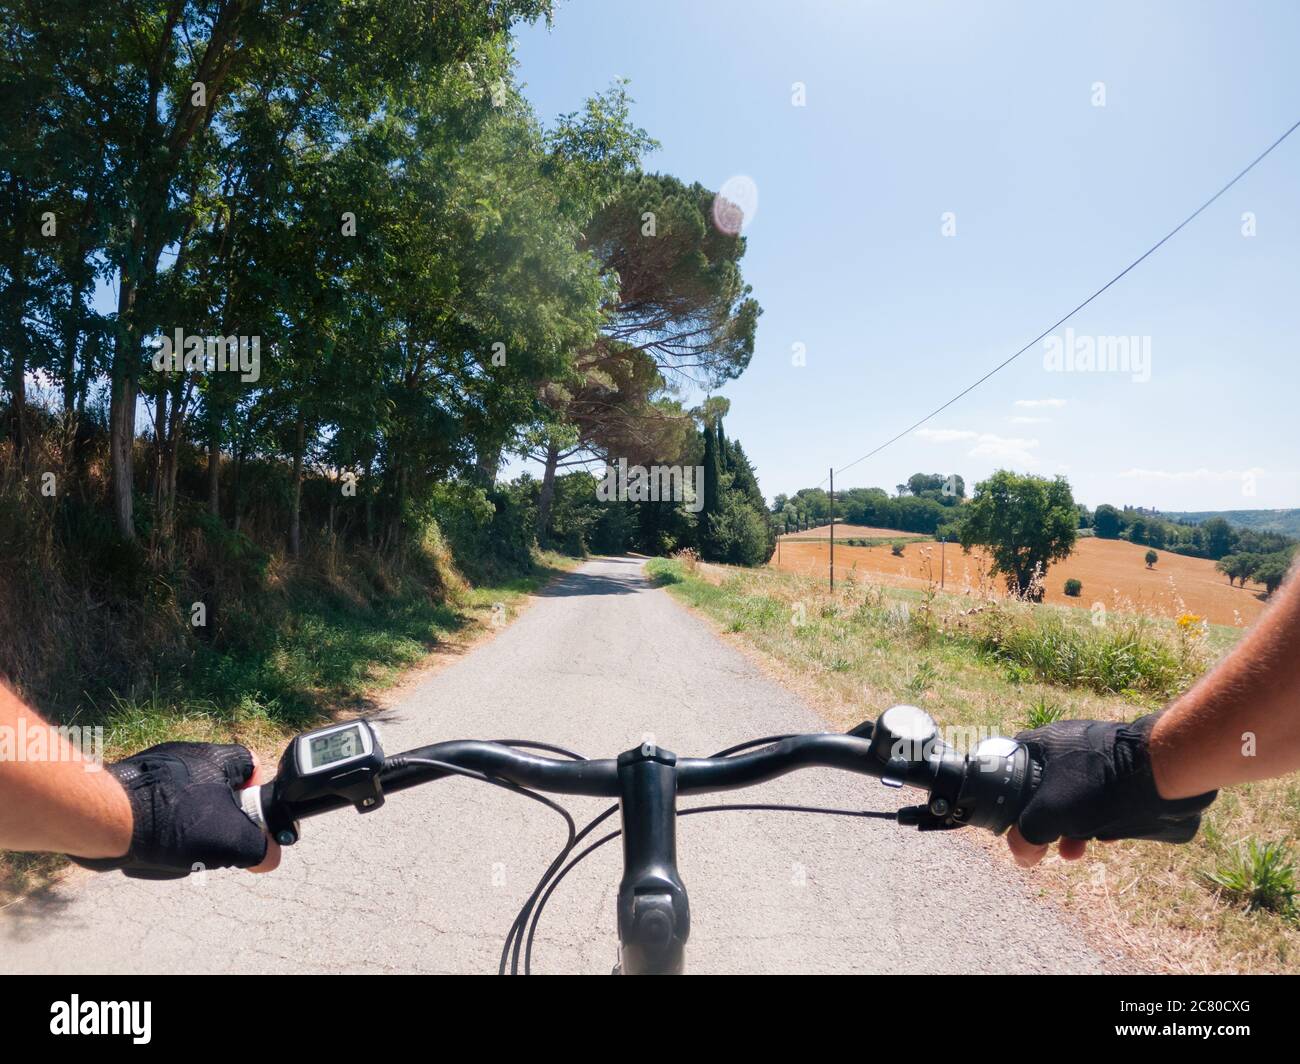 Pov e bike view Kamera auf dem Land - Radtourismus Konzept Stockfoto